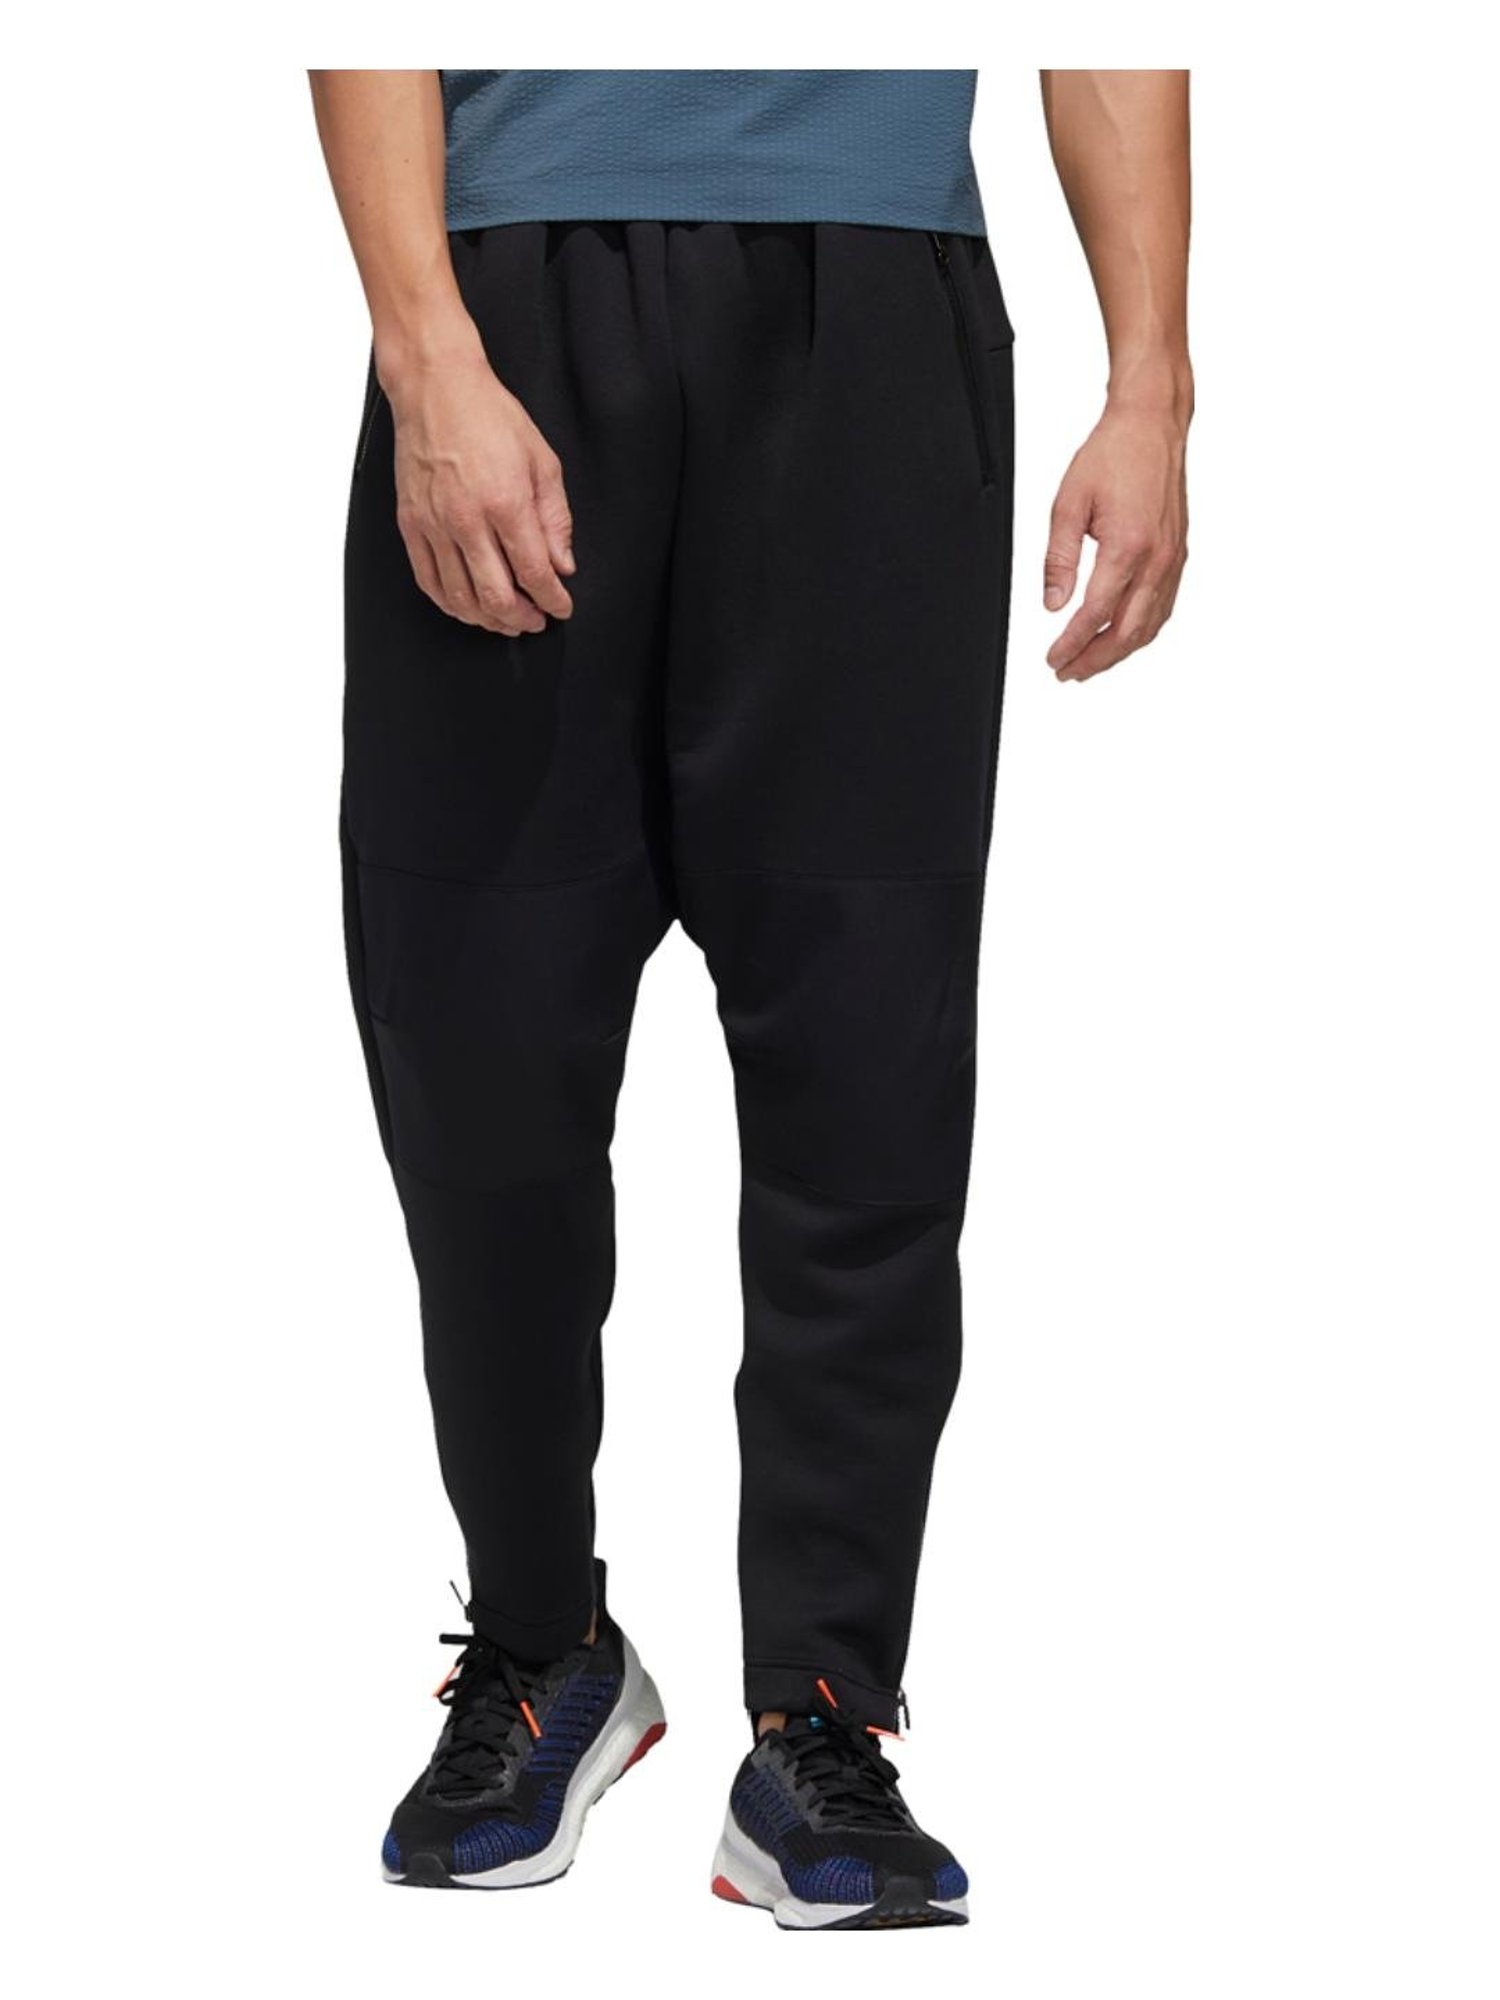 Adidas Mens NMD Track Pants s DM US Black  Amazonin Fashion